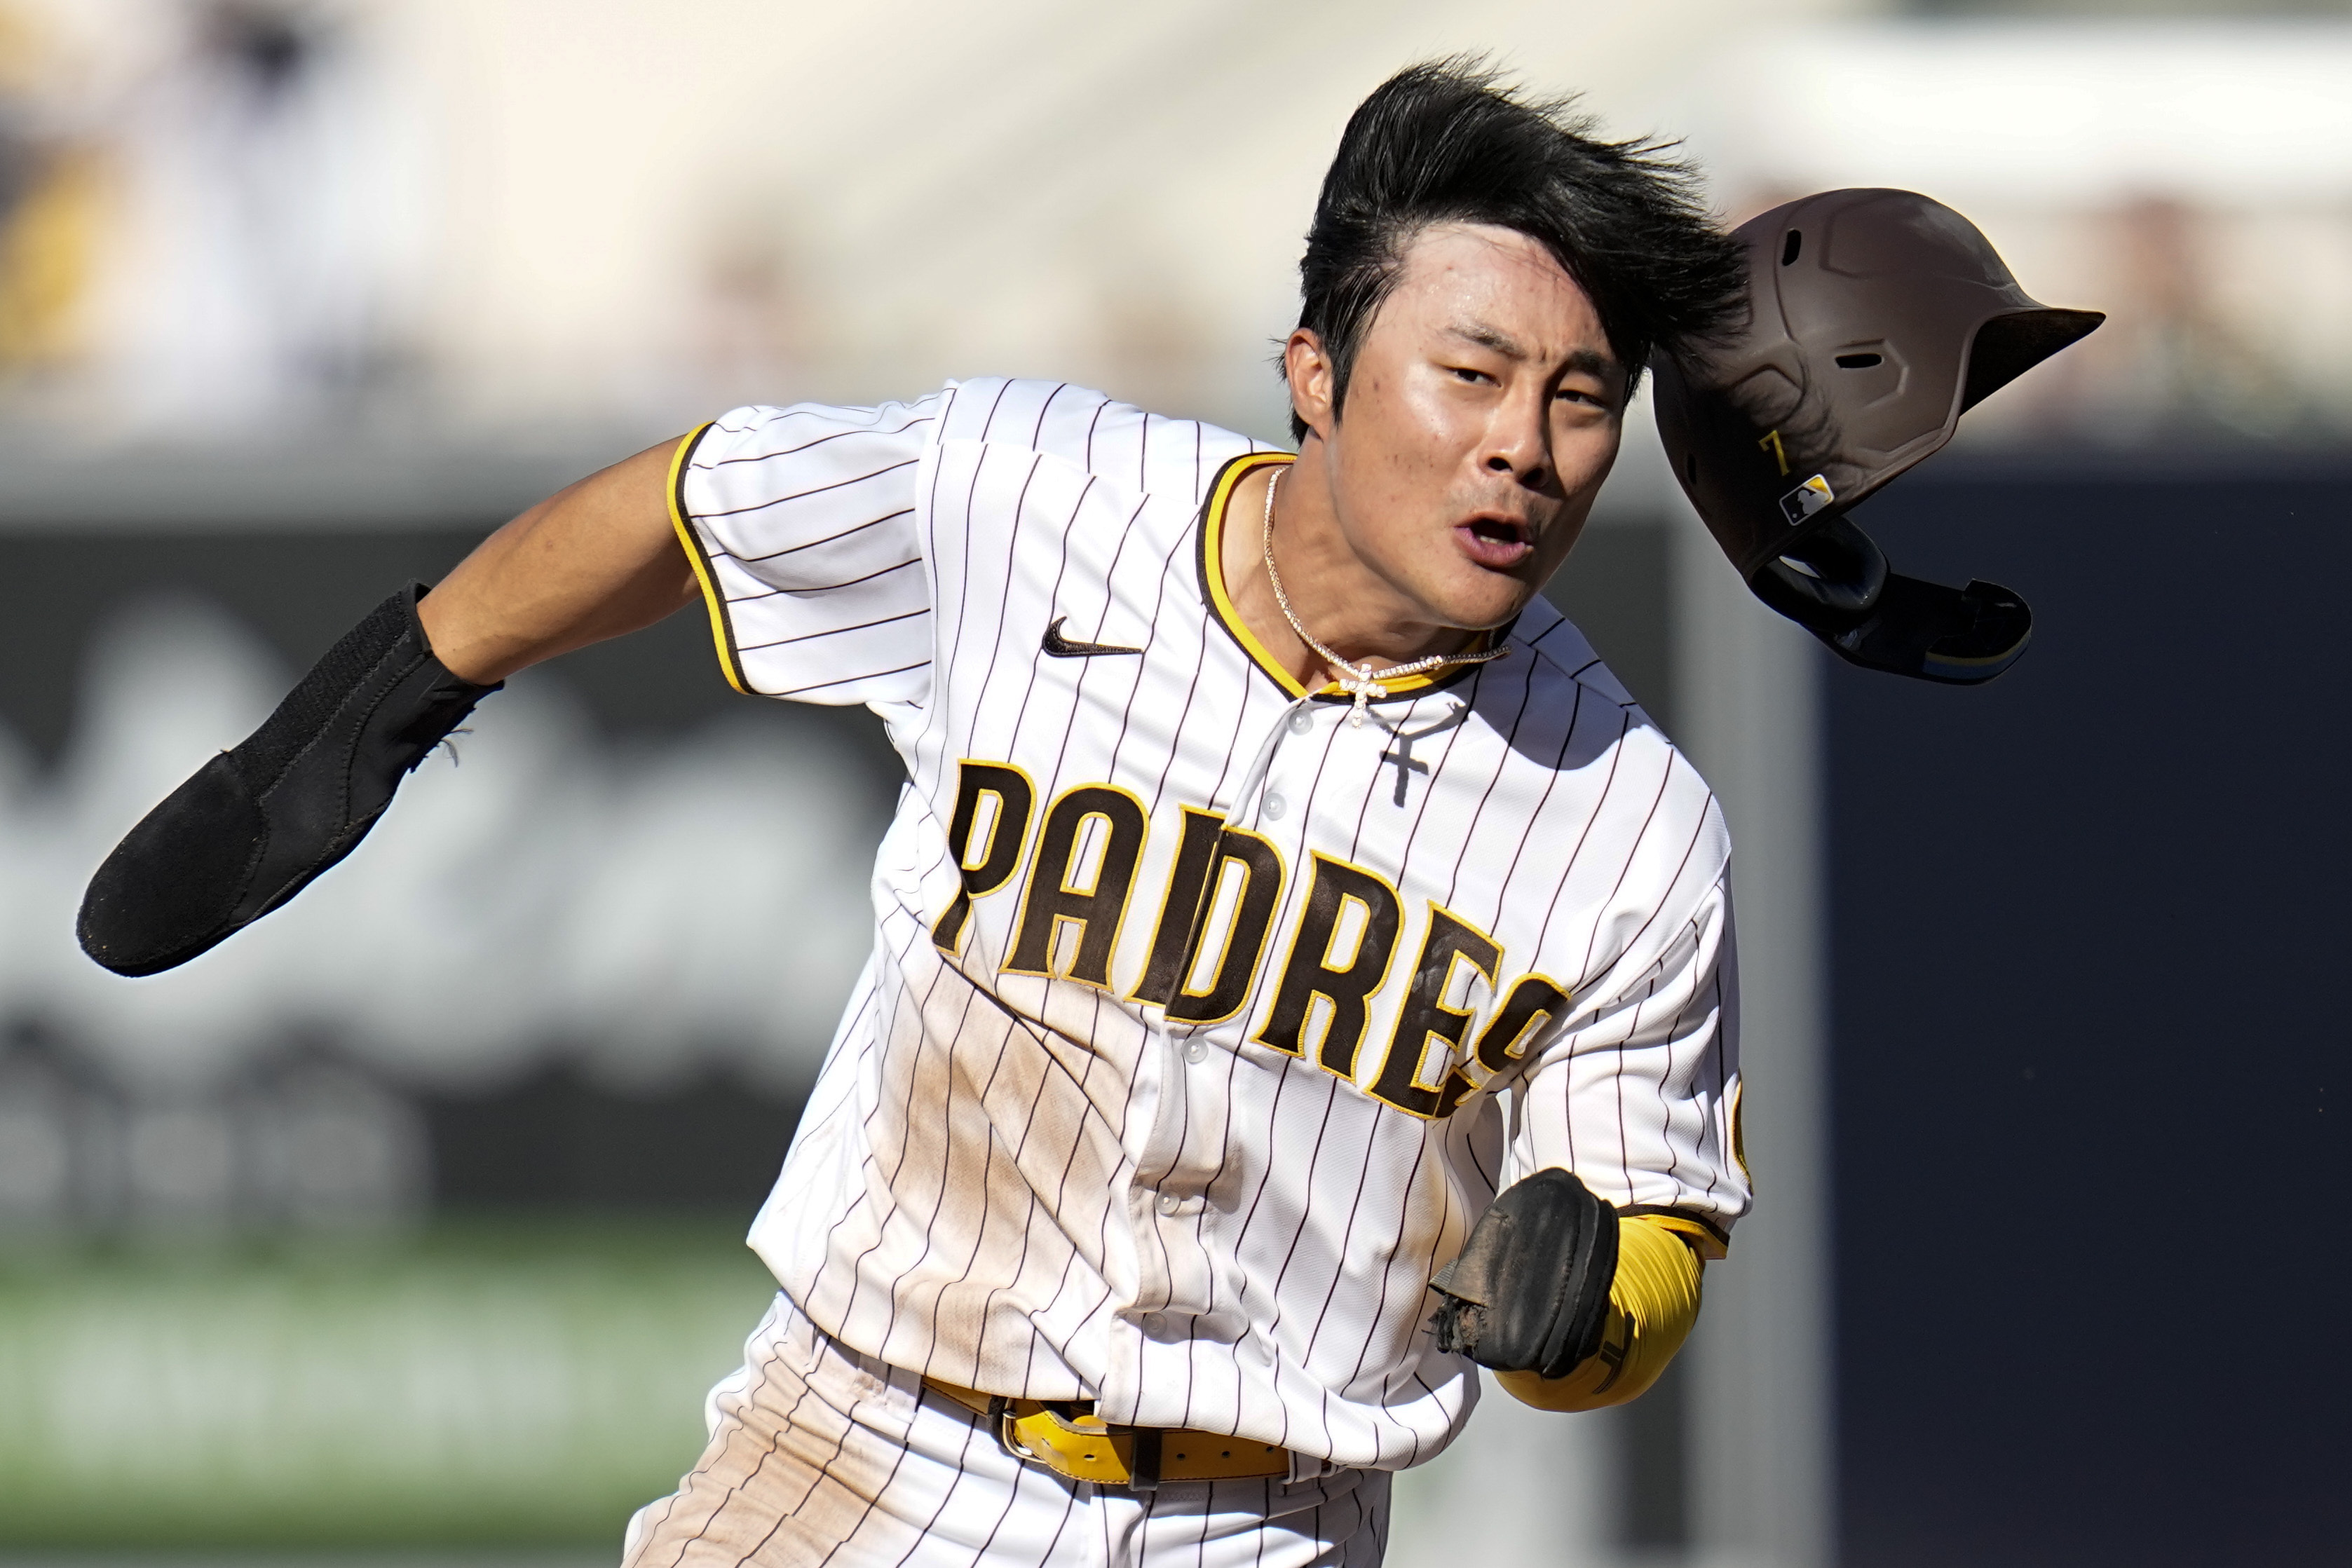 Ha-Seong Kim homers, leads Padres to win with bat: 김하성